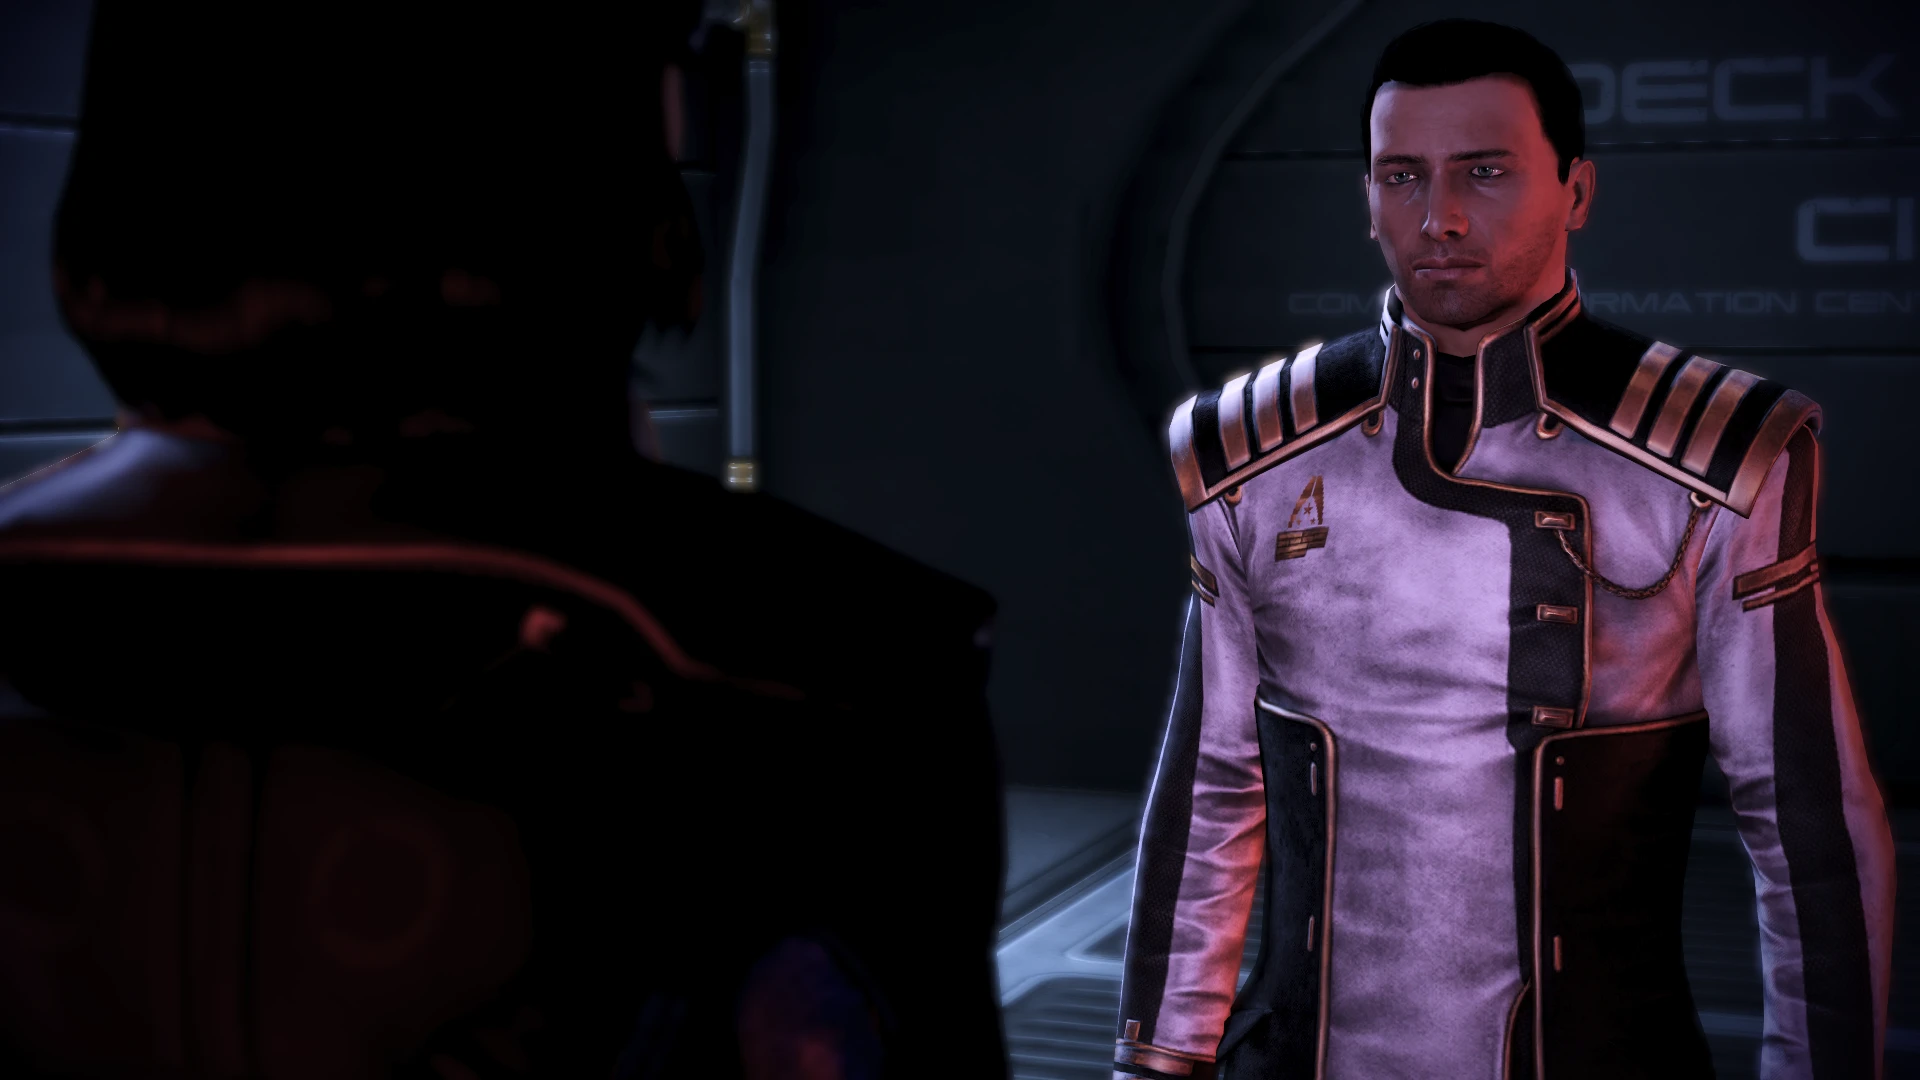 Alliance Dress Whites Mod At Mass Effect 3 Nexus Mods And Community.